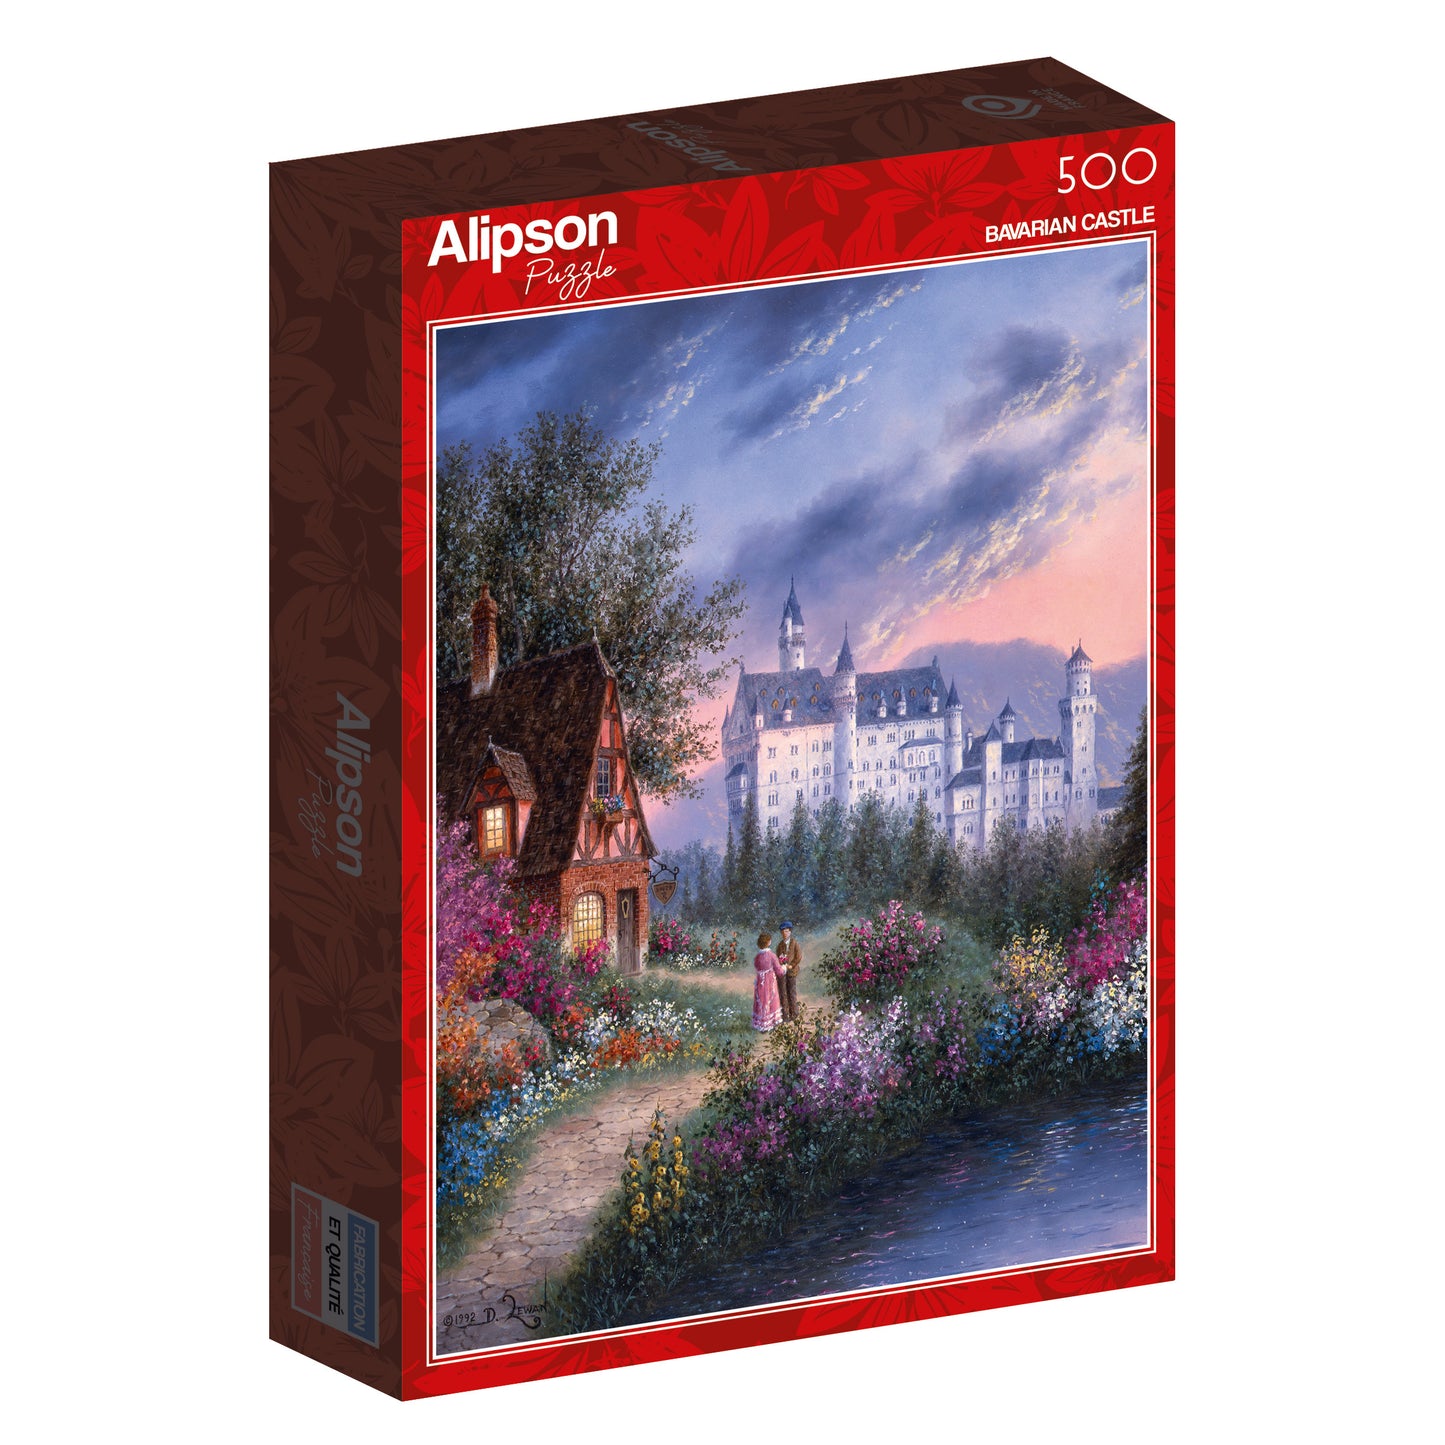 Alipson - Bavarian Castle - 500 Piece Jigsaw Puzzle